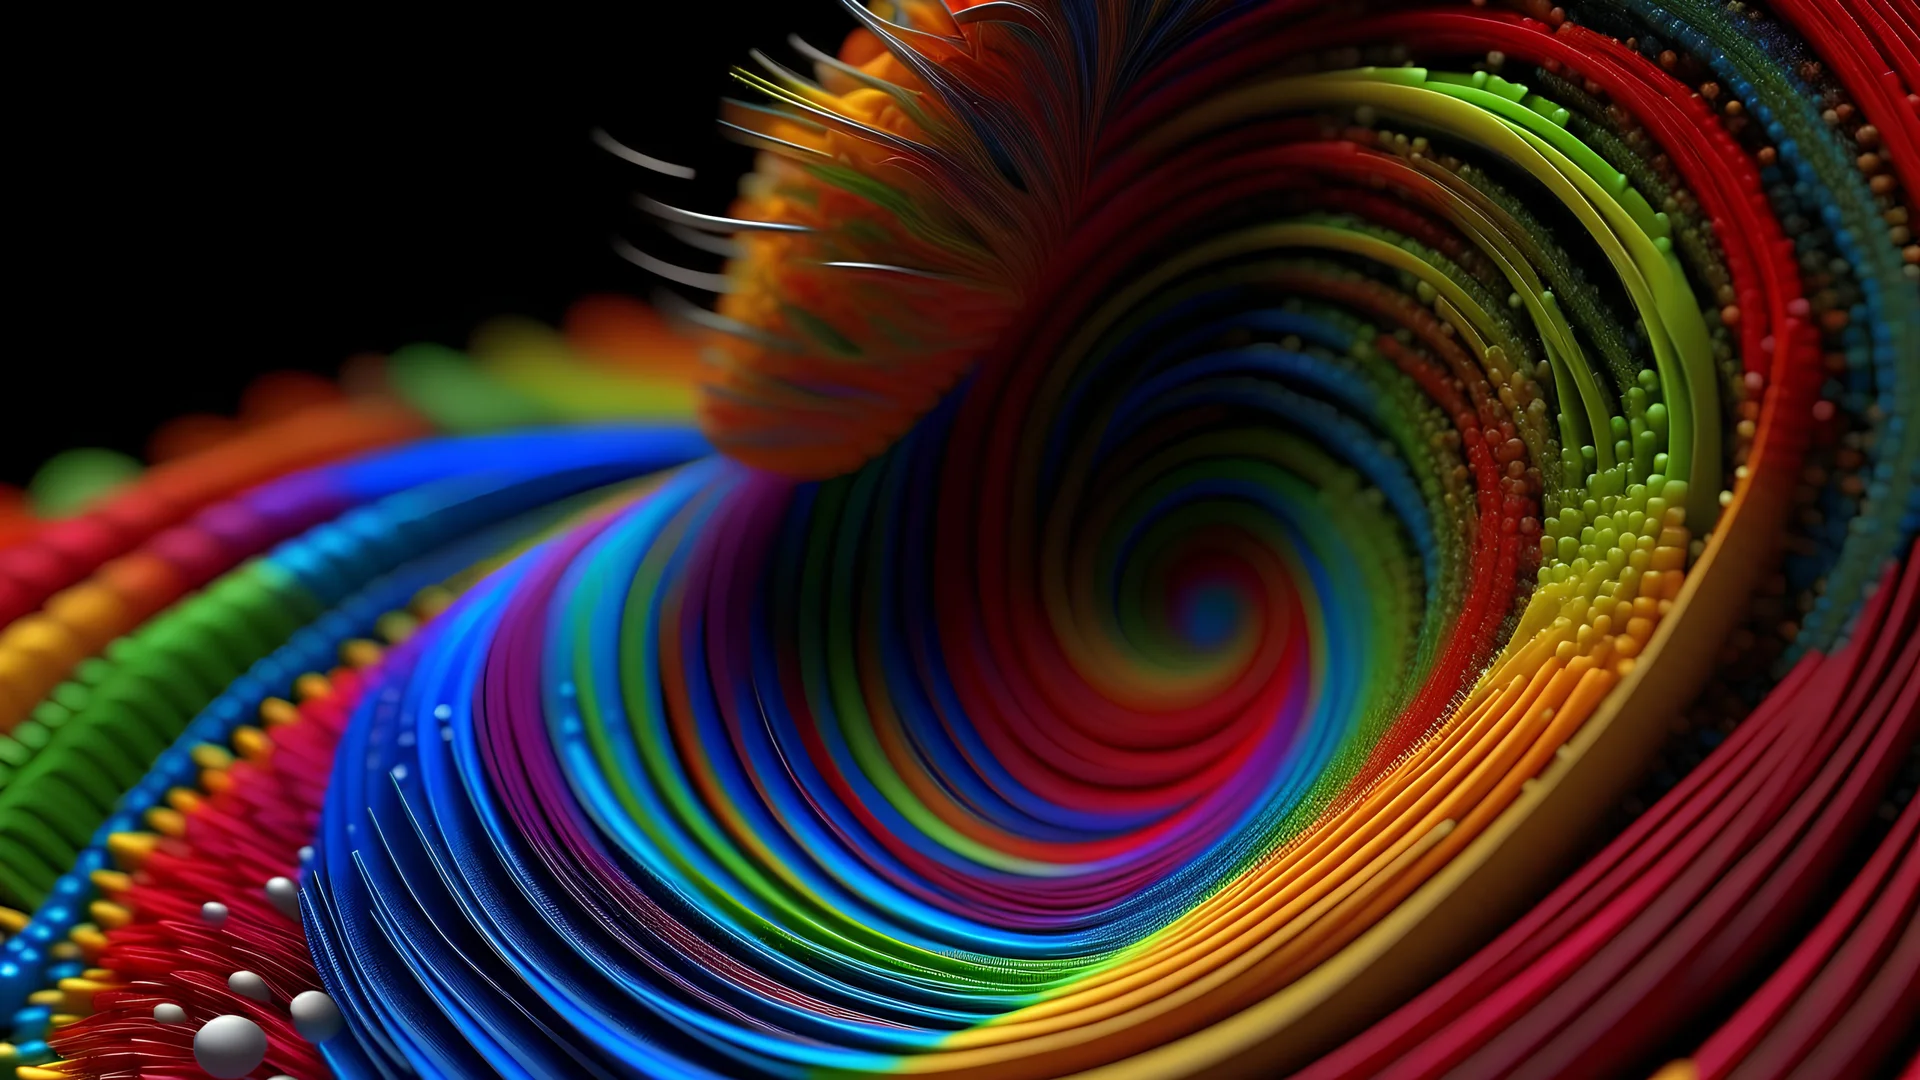 3D 16:9 VERY colorful hyper-realistic DETAILED FIBONACCI SERIES